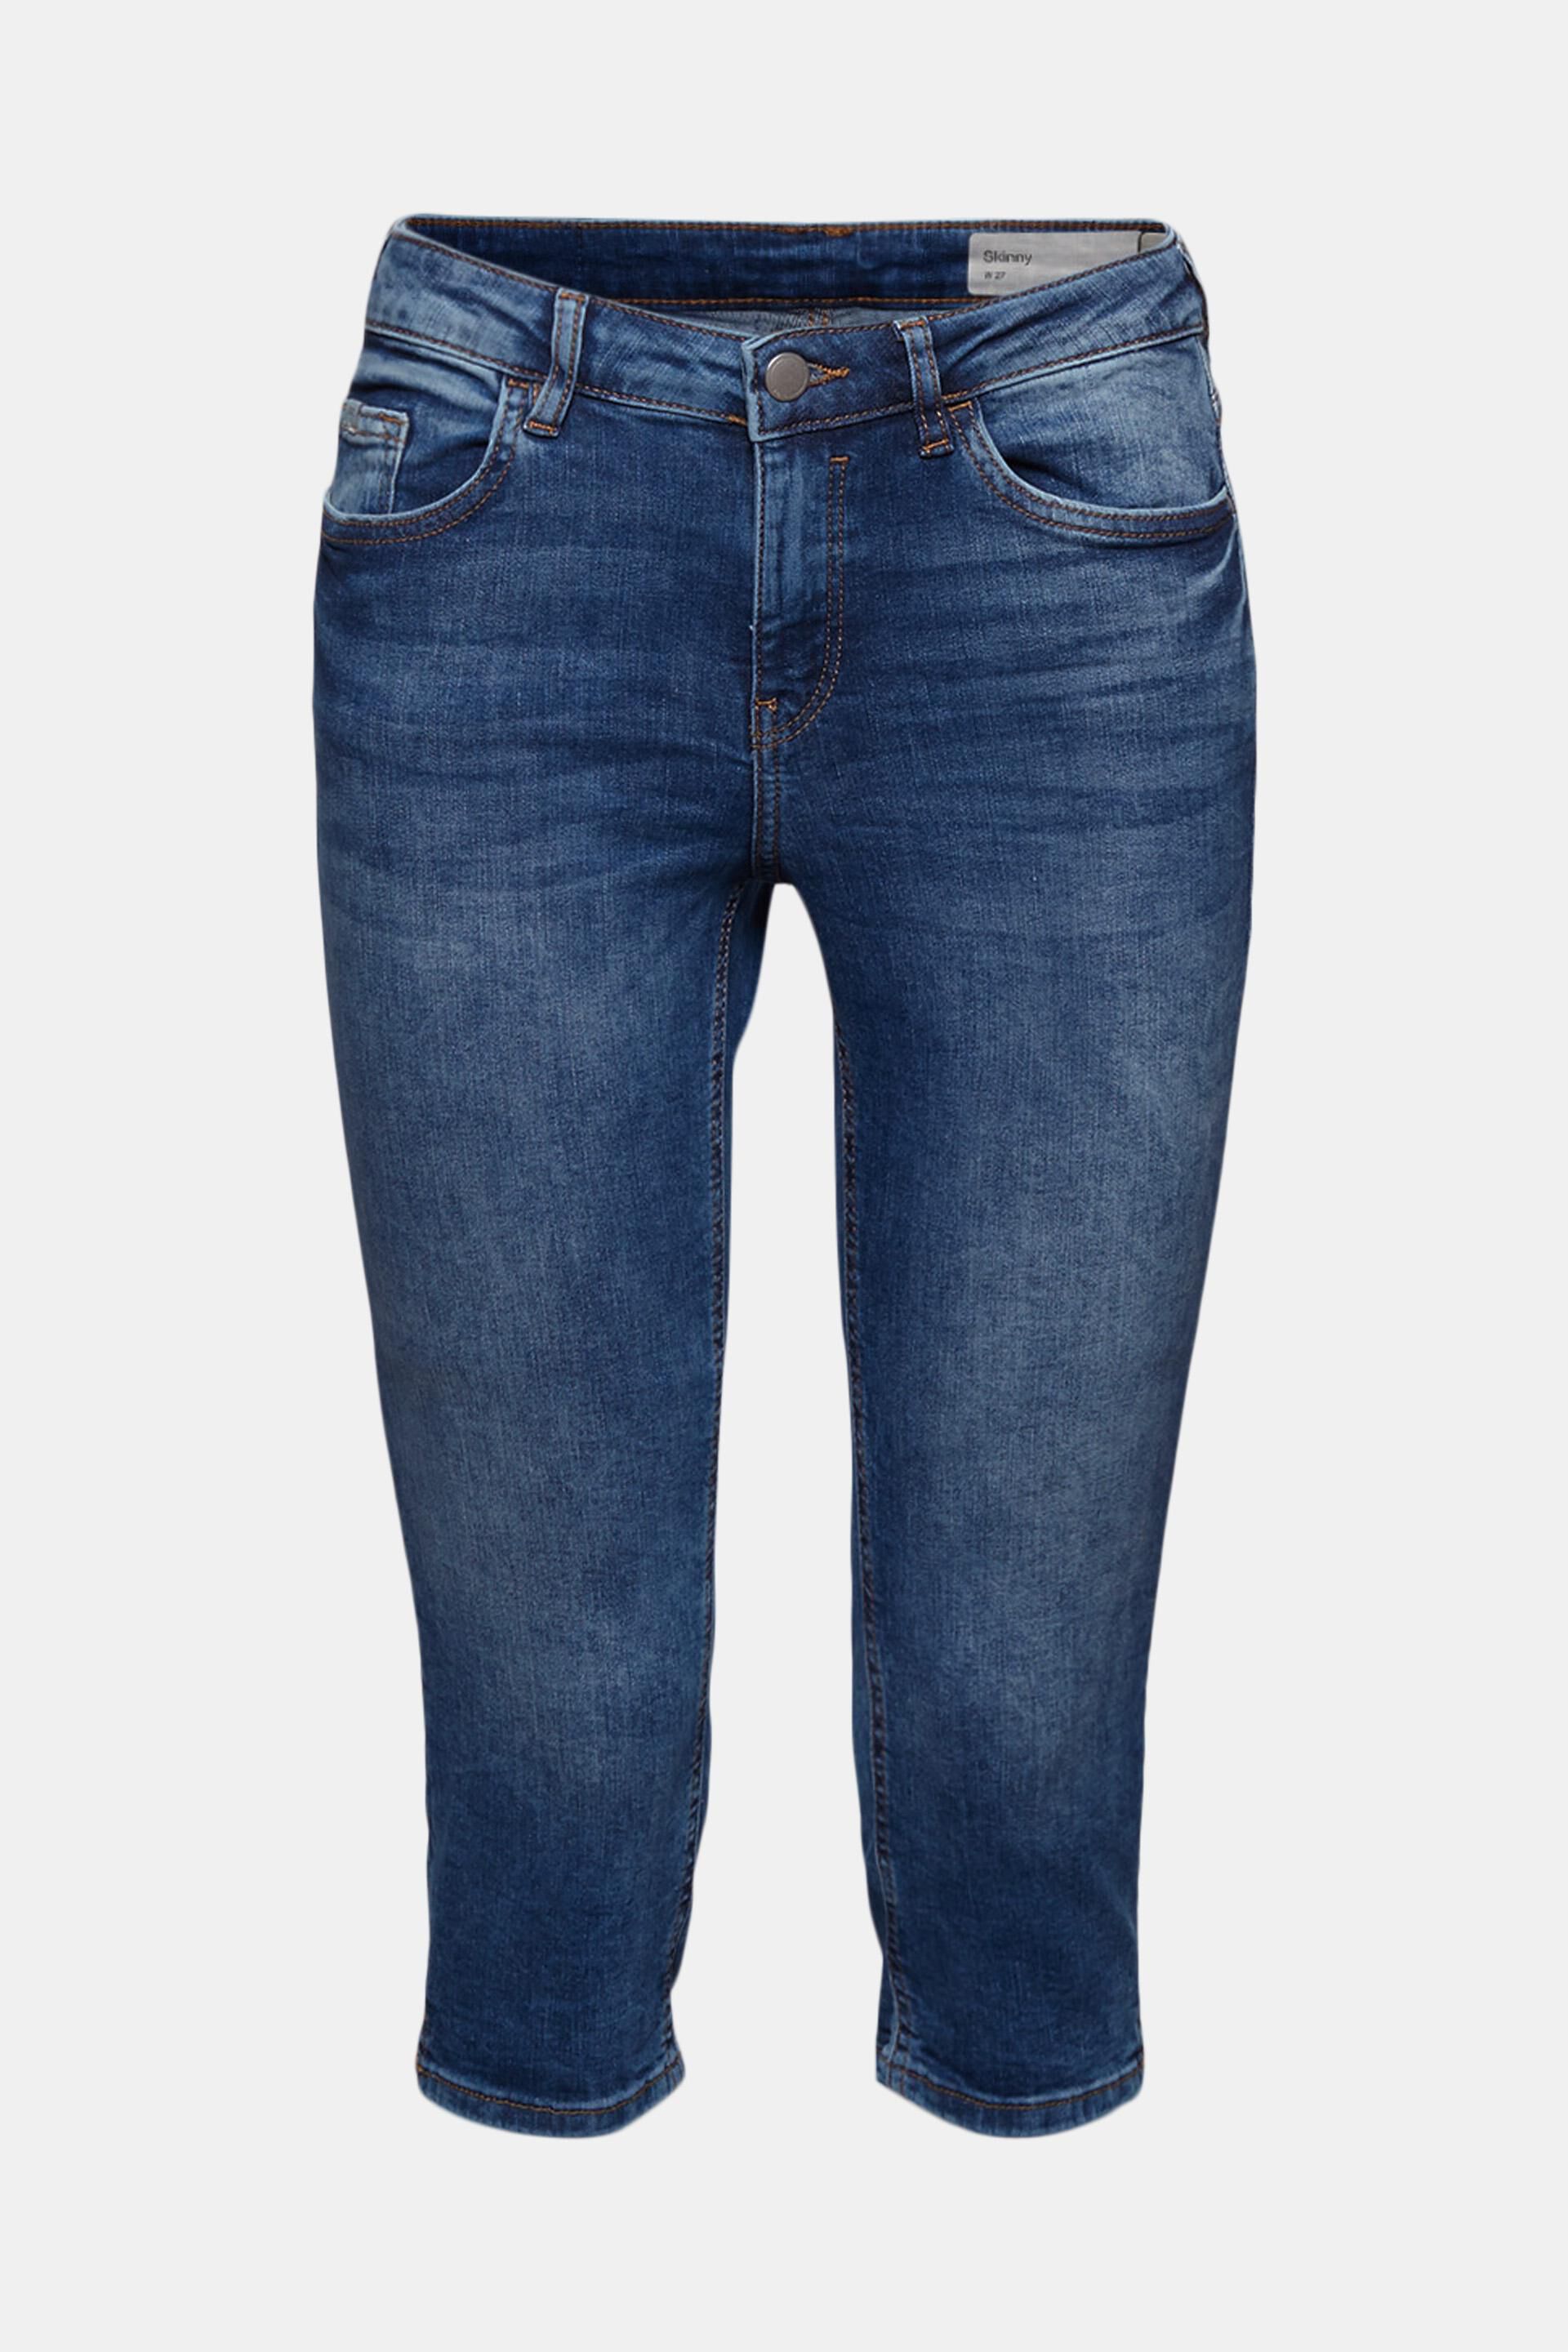 Esprit Damen Capri-Jeans aus Bio-Baumwolle